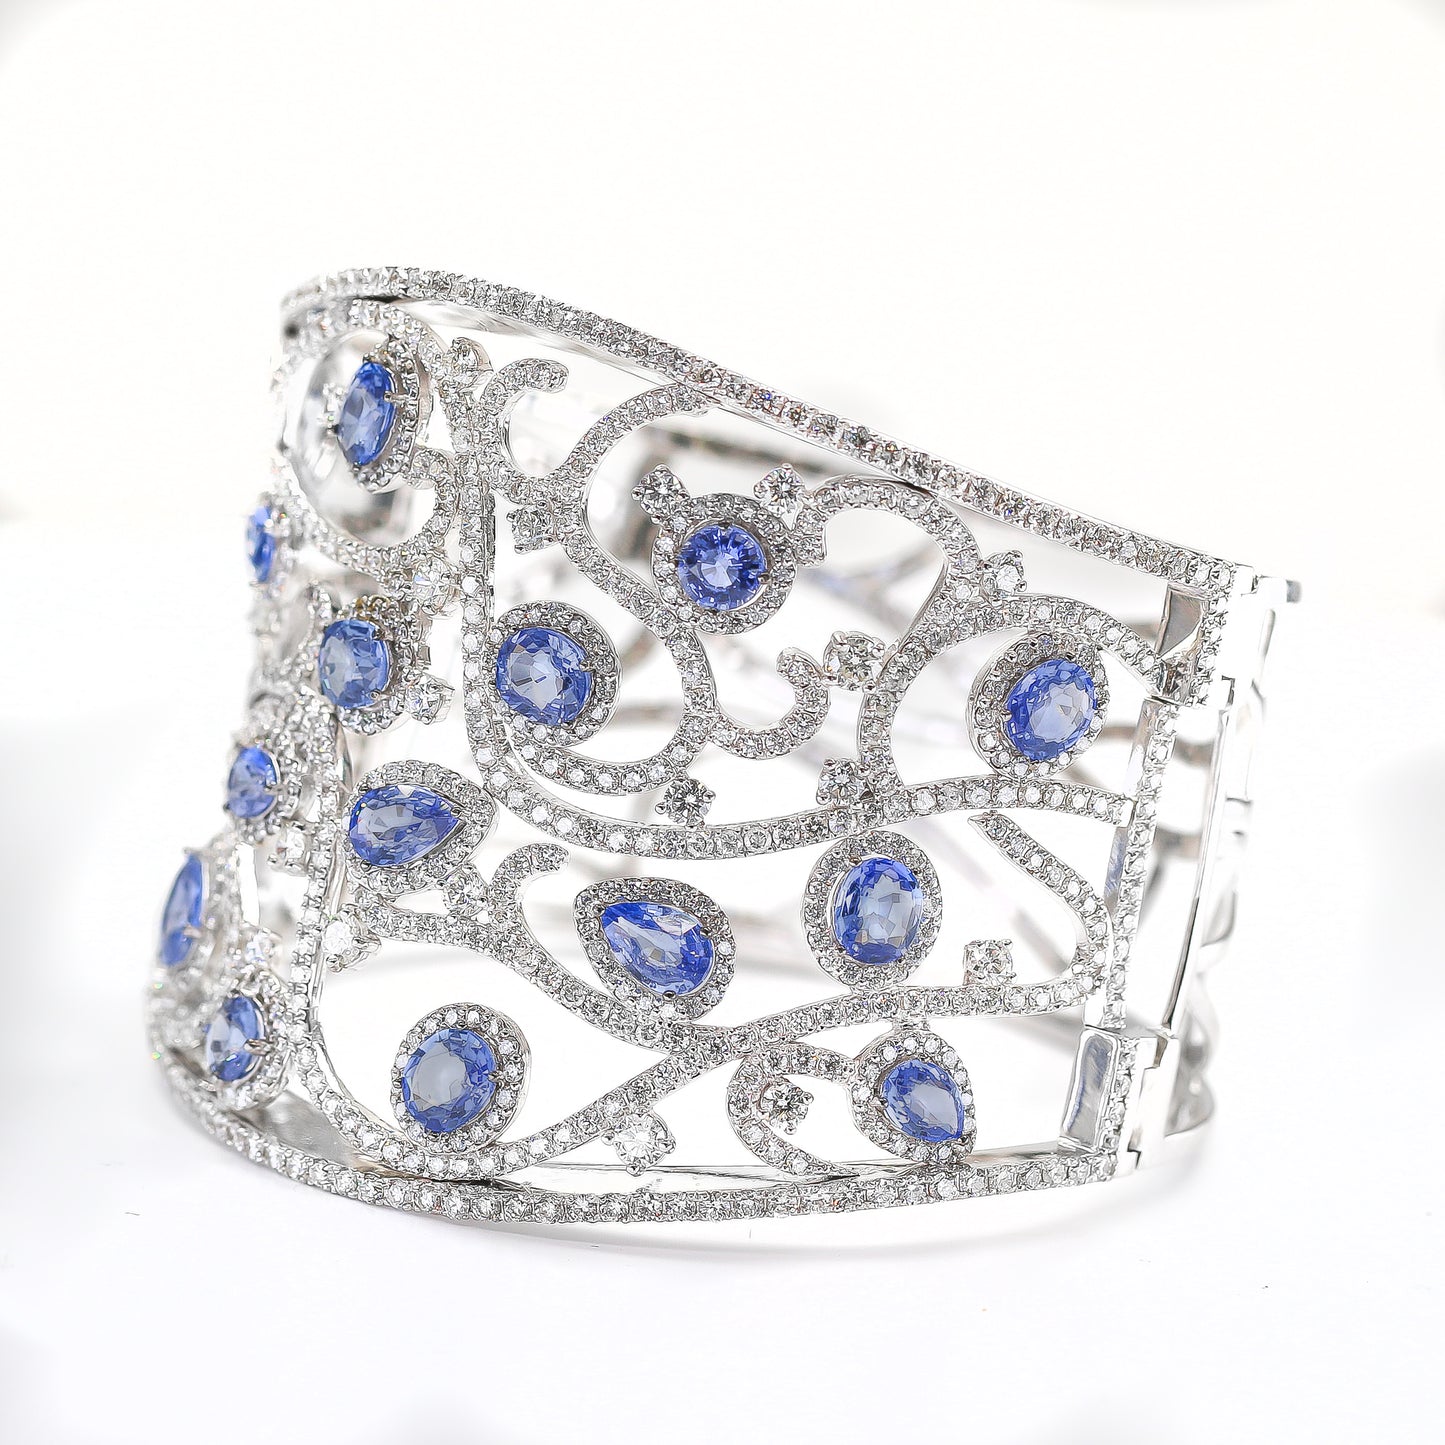 Blue Sapphire Bangle Bracelet 10.50cts With Diamonds 6.50cts 18K Gold